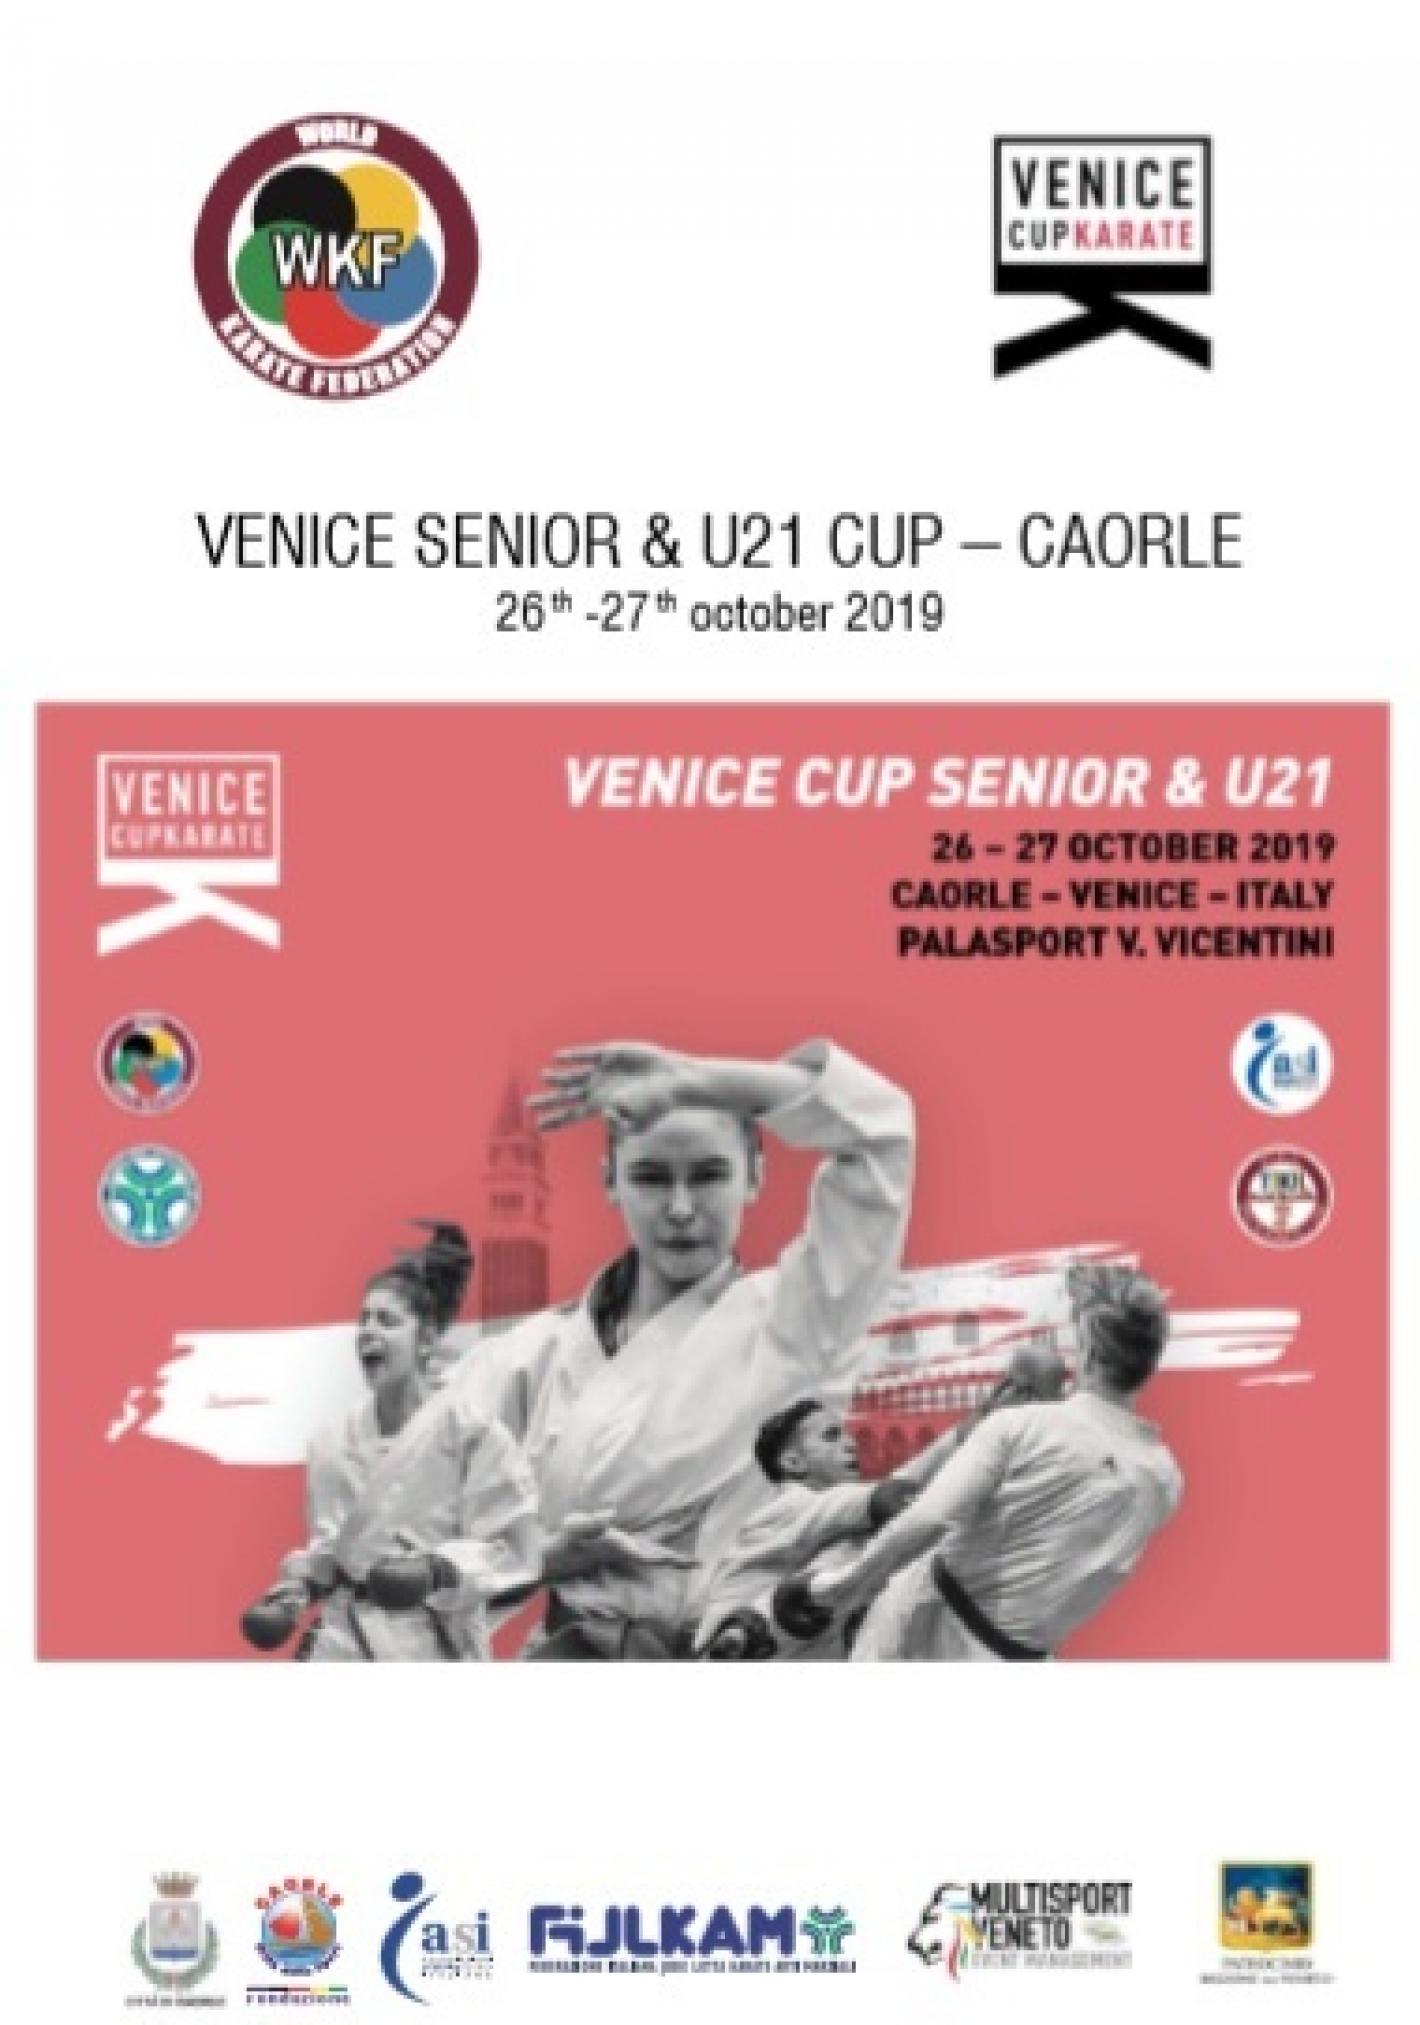 images/veneto/karate/2019/medium/venicesenioru21cup.jpg